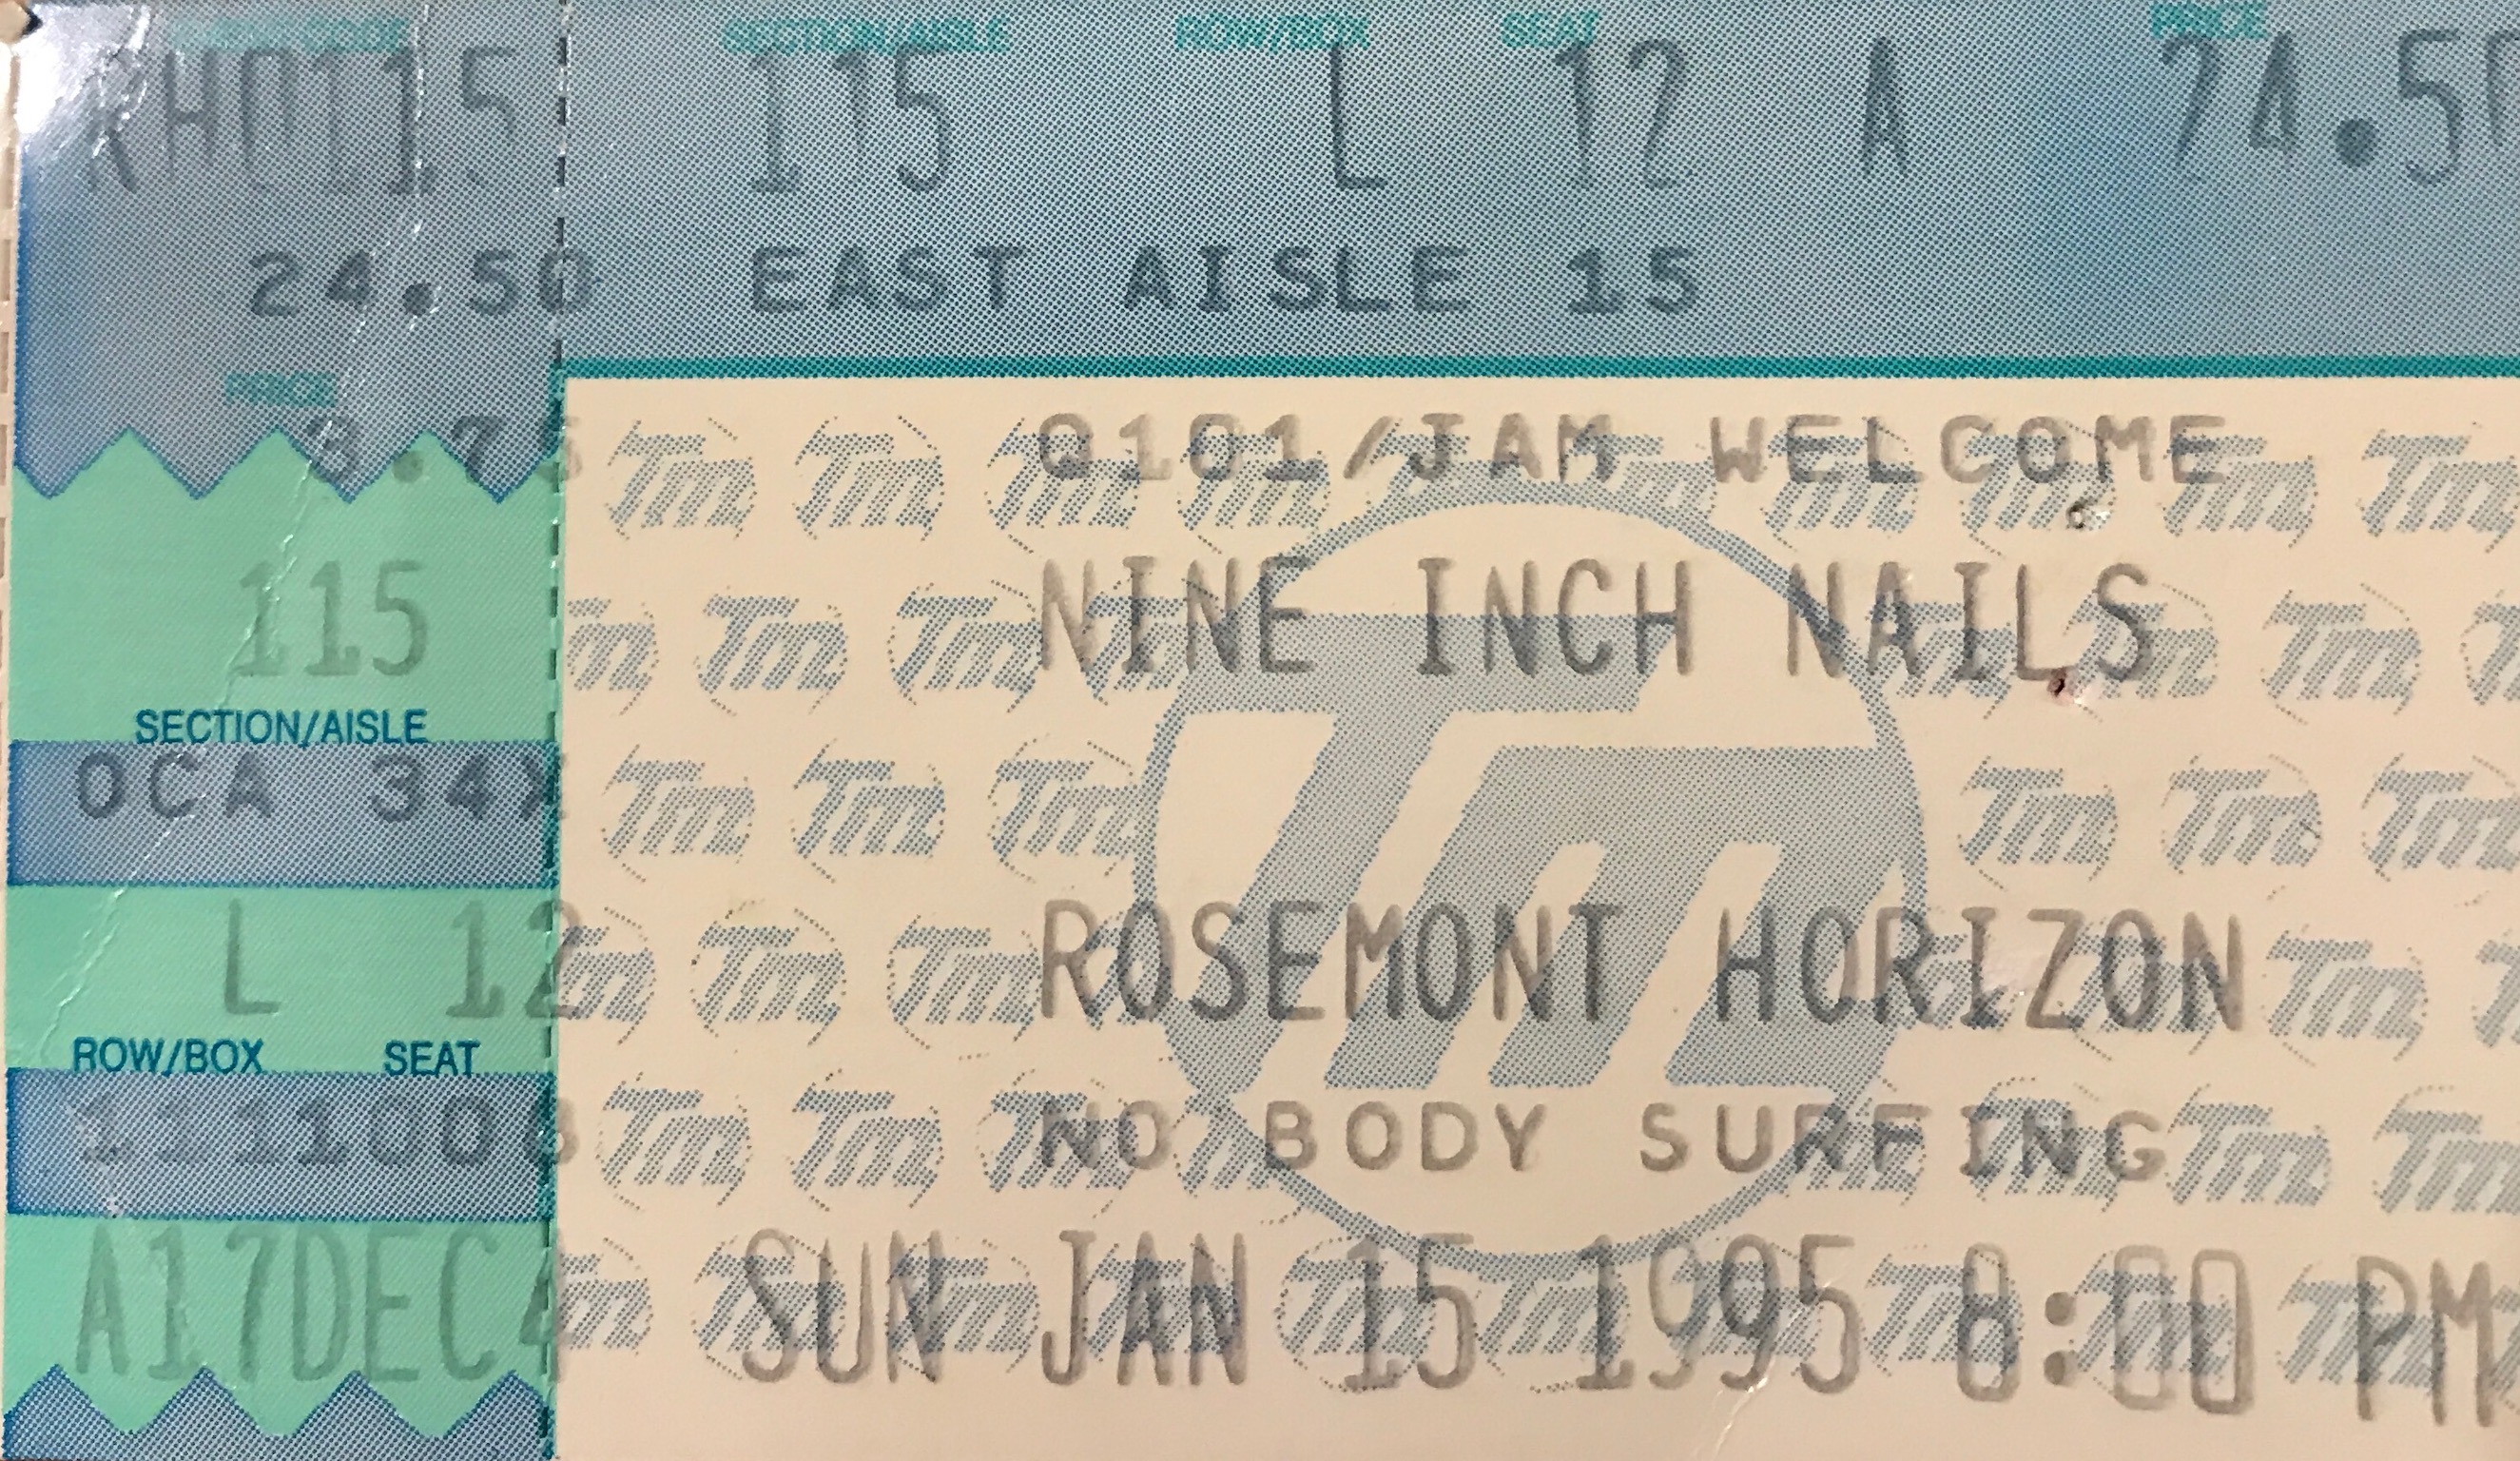 1995/01/15 Ticket